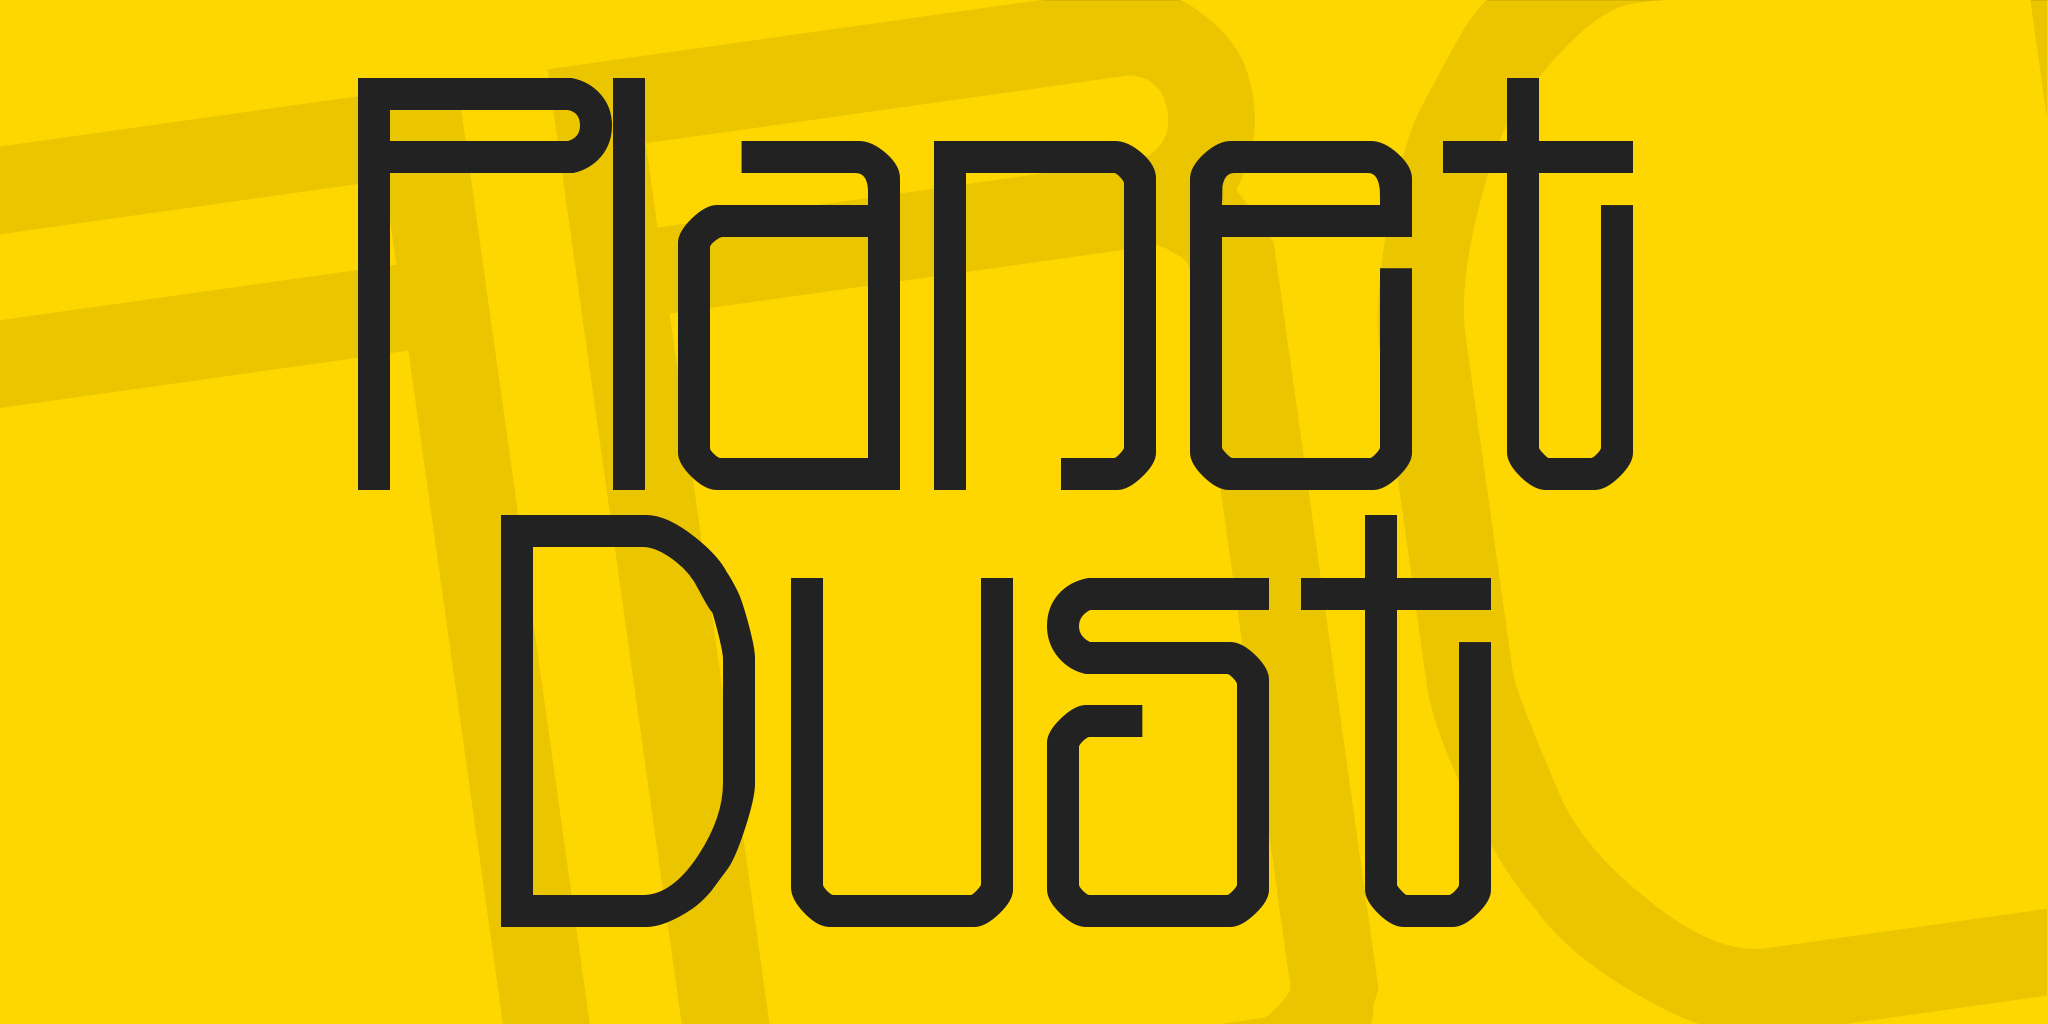 Planet Dust